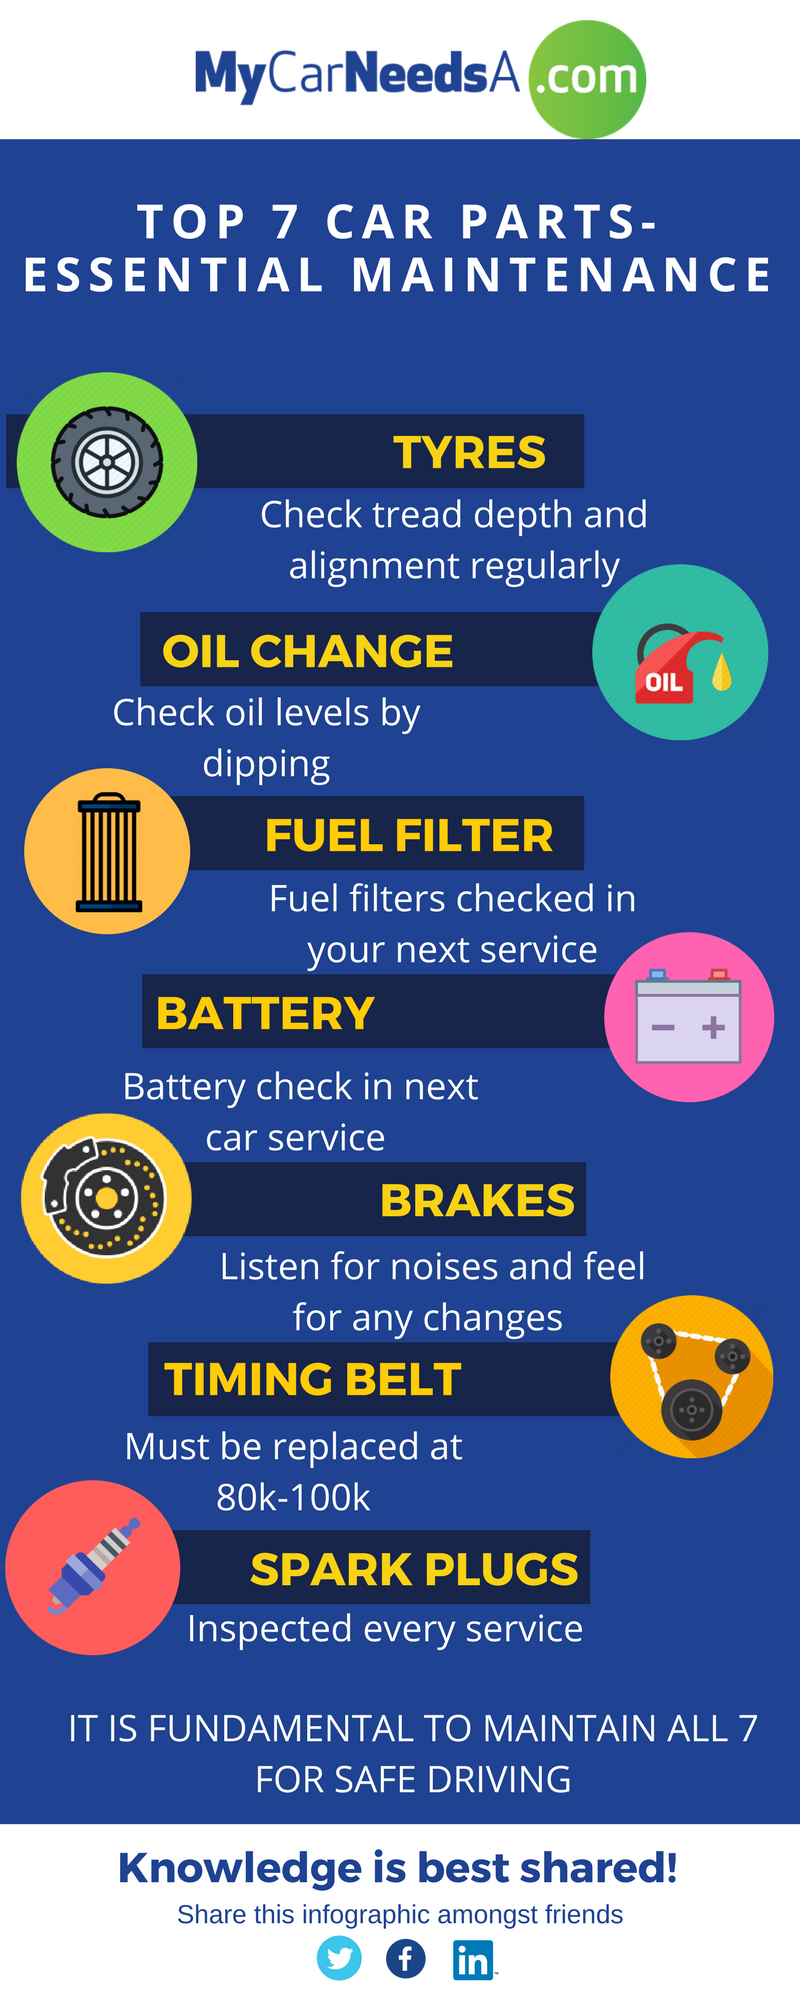 Car Parts For Essential Car Maintenance